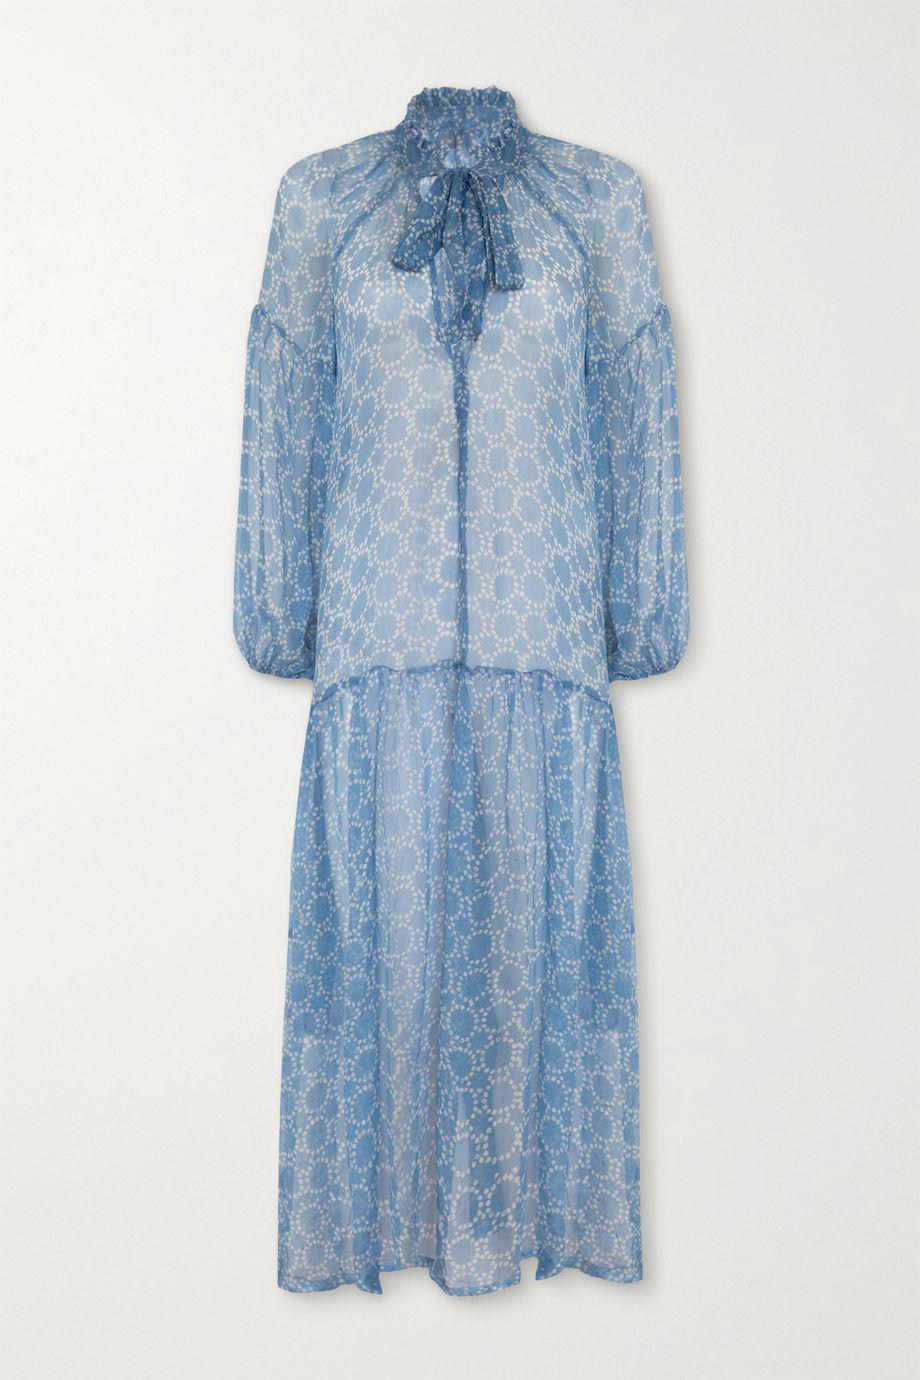 + NET SUSTAIN Donna printed silk-crepon dress by CLOE CASSANDRO